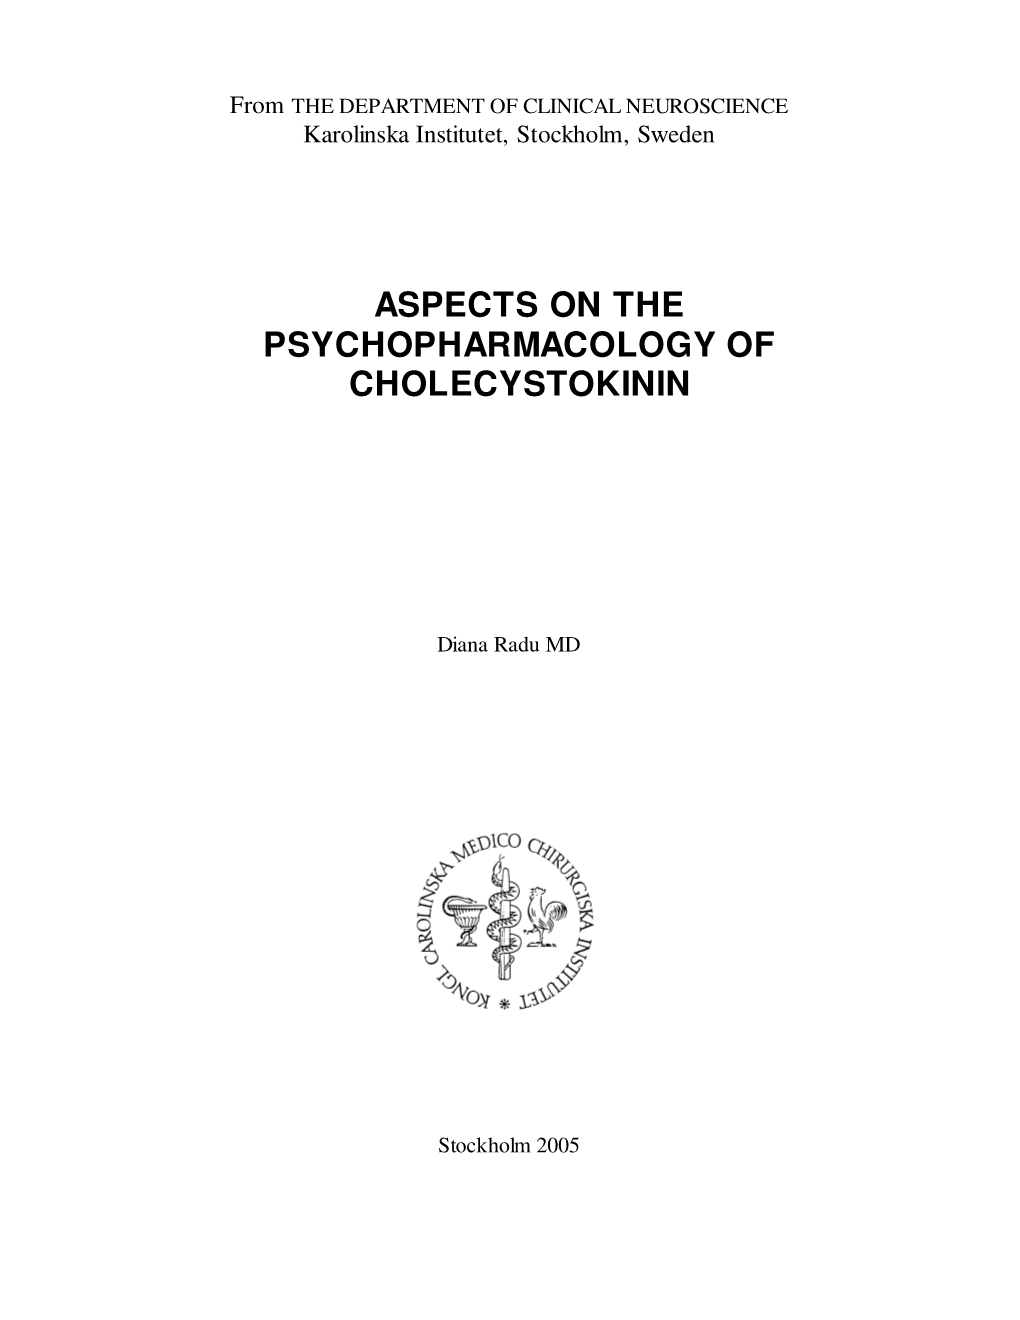 Aspects on the Psychopharmacology of Cholecystokinin